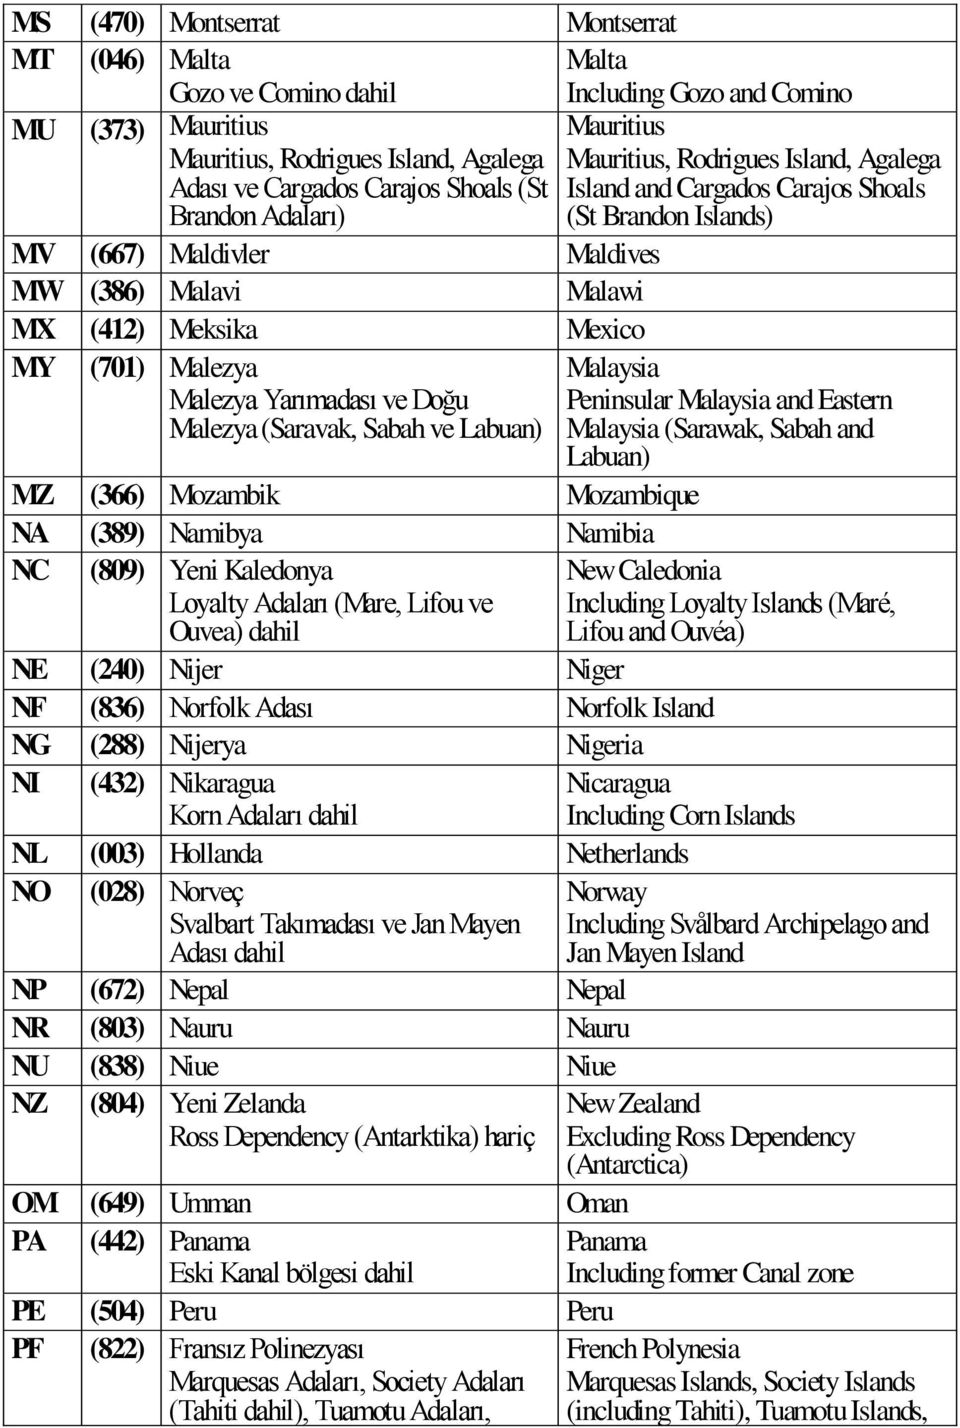 (389) Namibya Namibia NC (809) Yeni Kaledonya Loyalty Adaları (Mare, Lifou ve Ouvea) dahil NE (240) Nijer Niger NF (836) Norfolk Adası Norfolk Island NG (288) Nijerya Nigeria NI (432) Nikaragua Korn